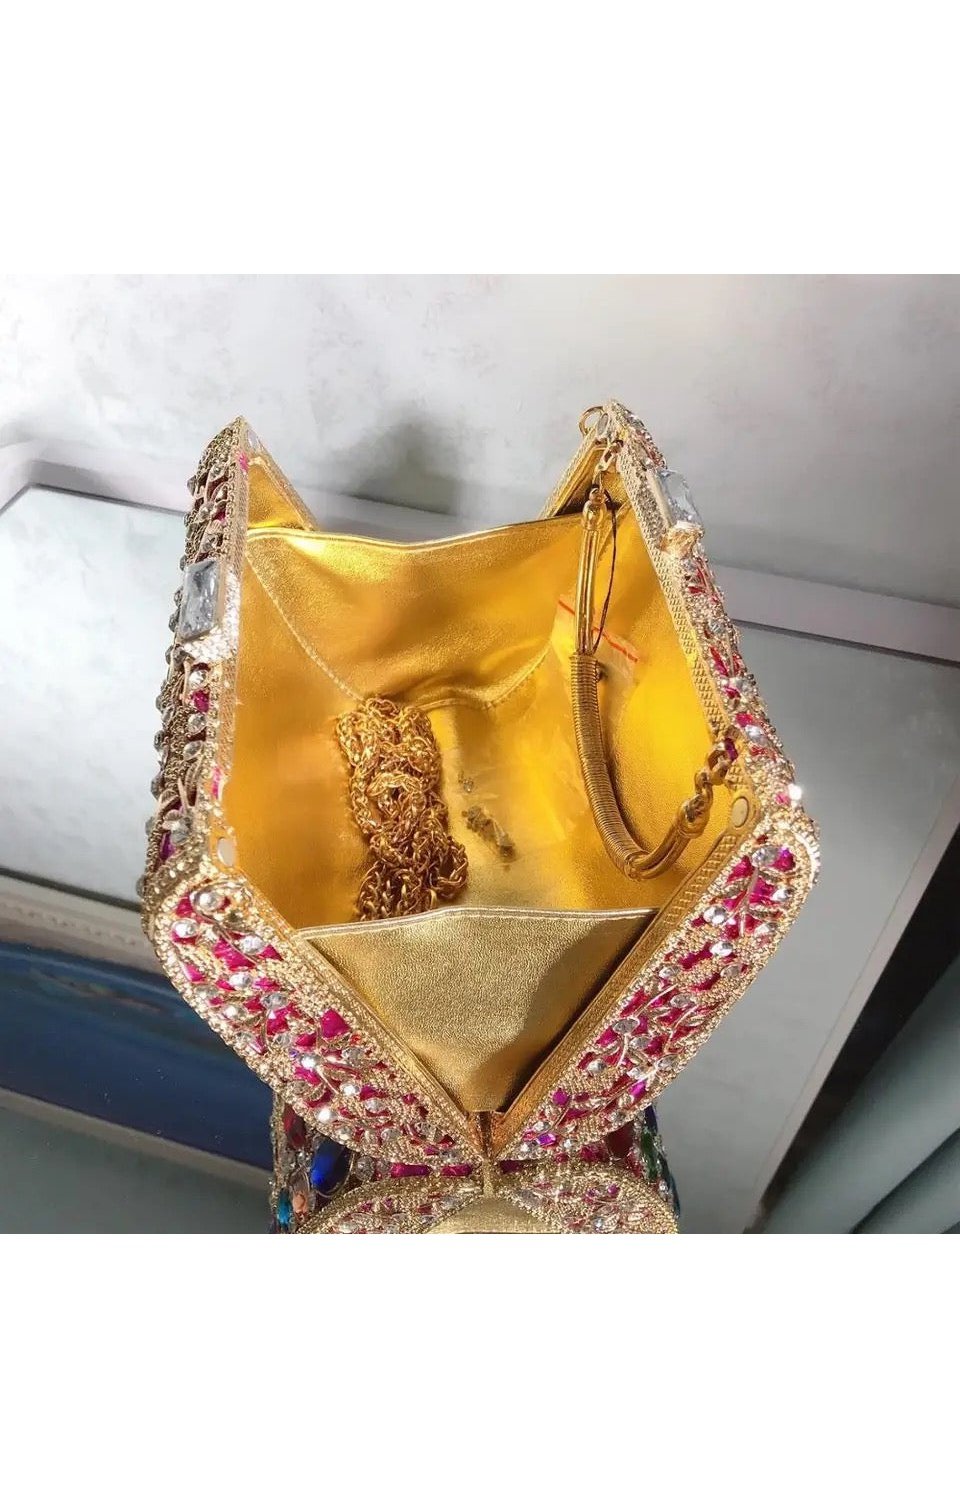 Crystal Diamond Multicolored Clutch bag purse